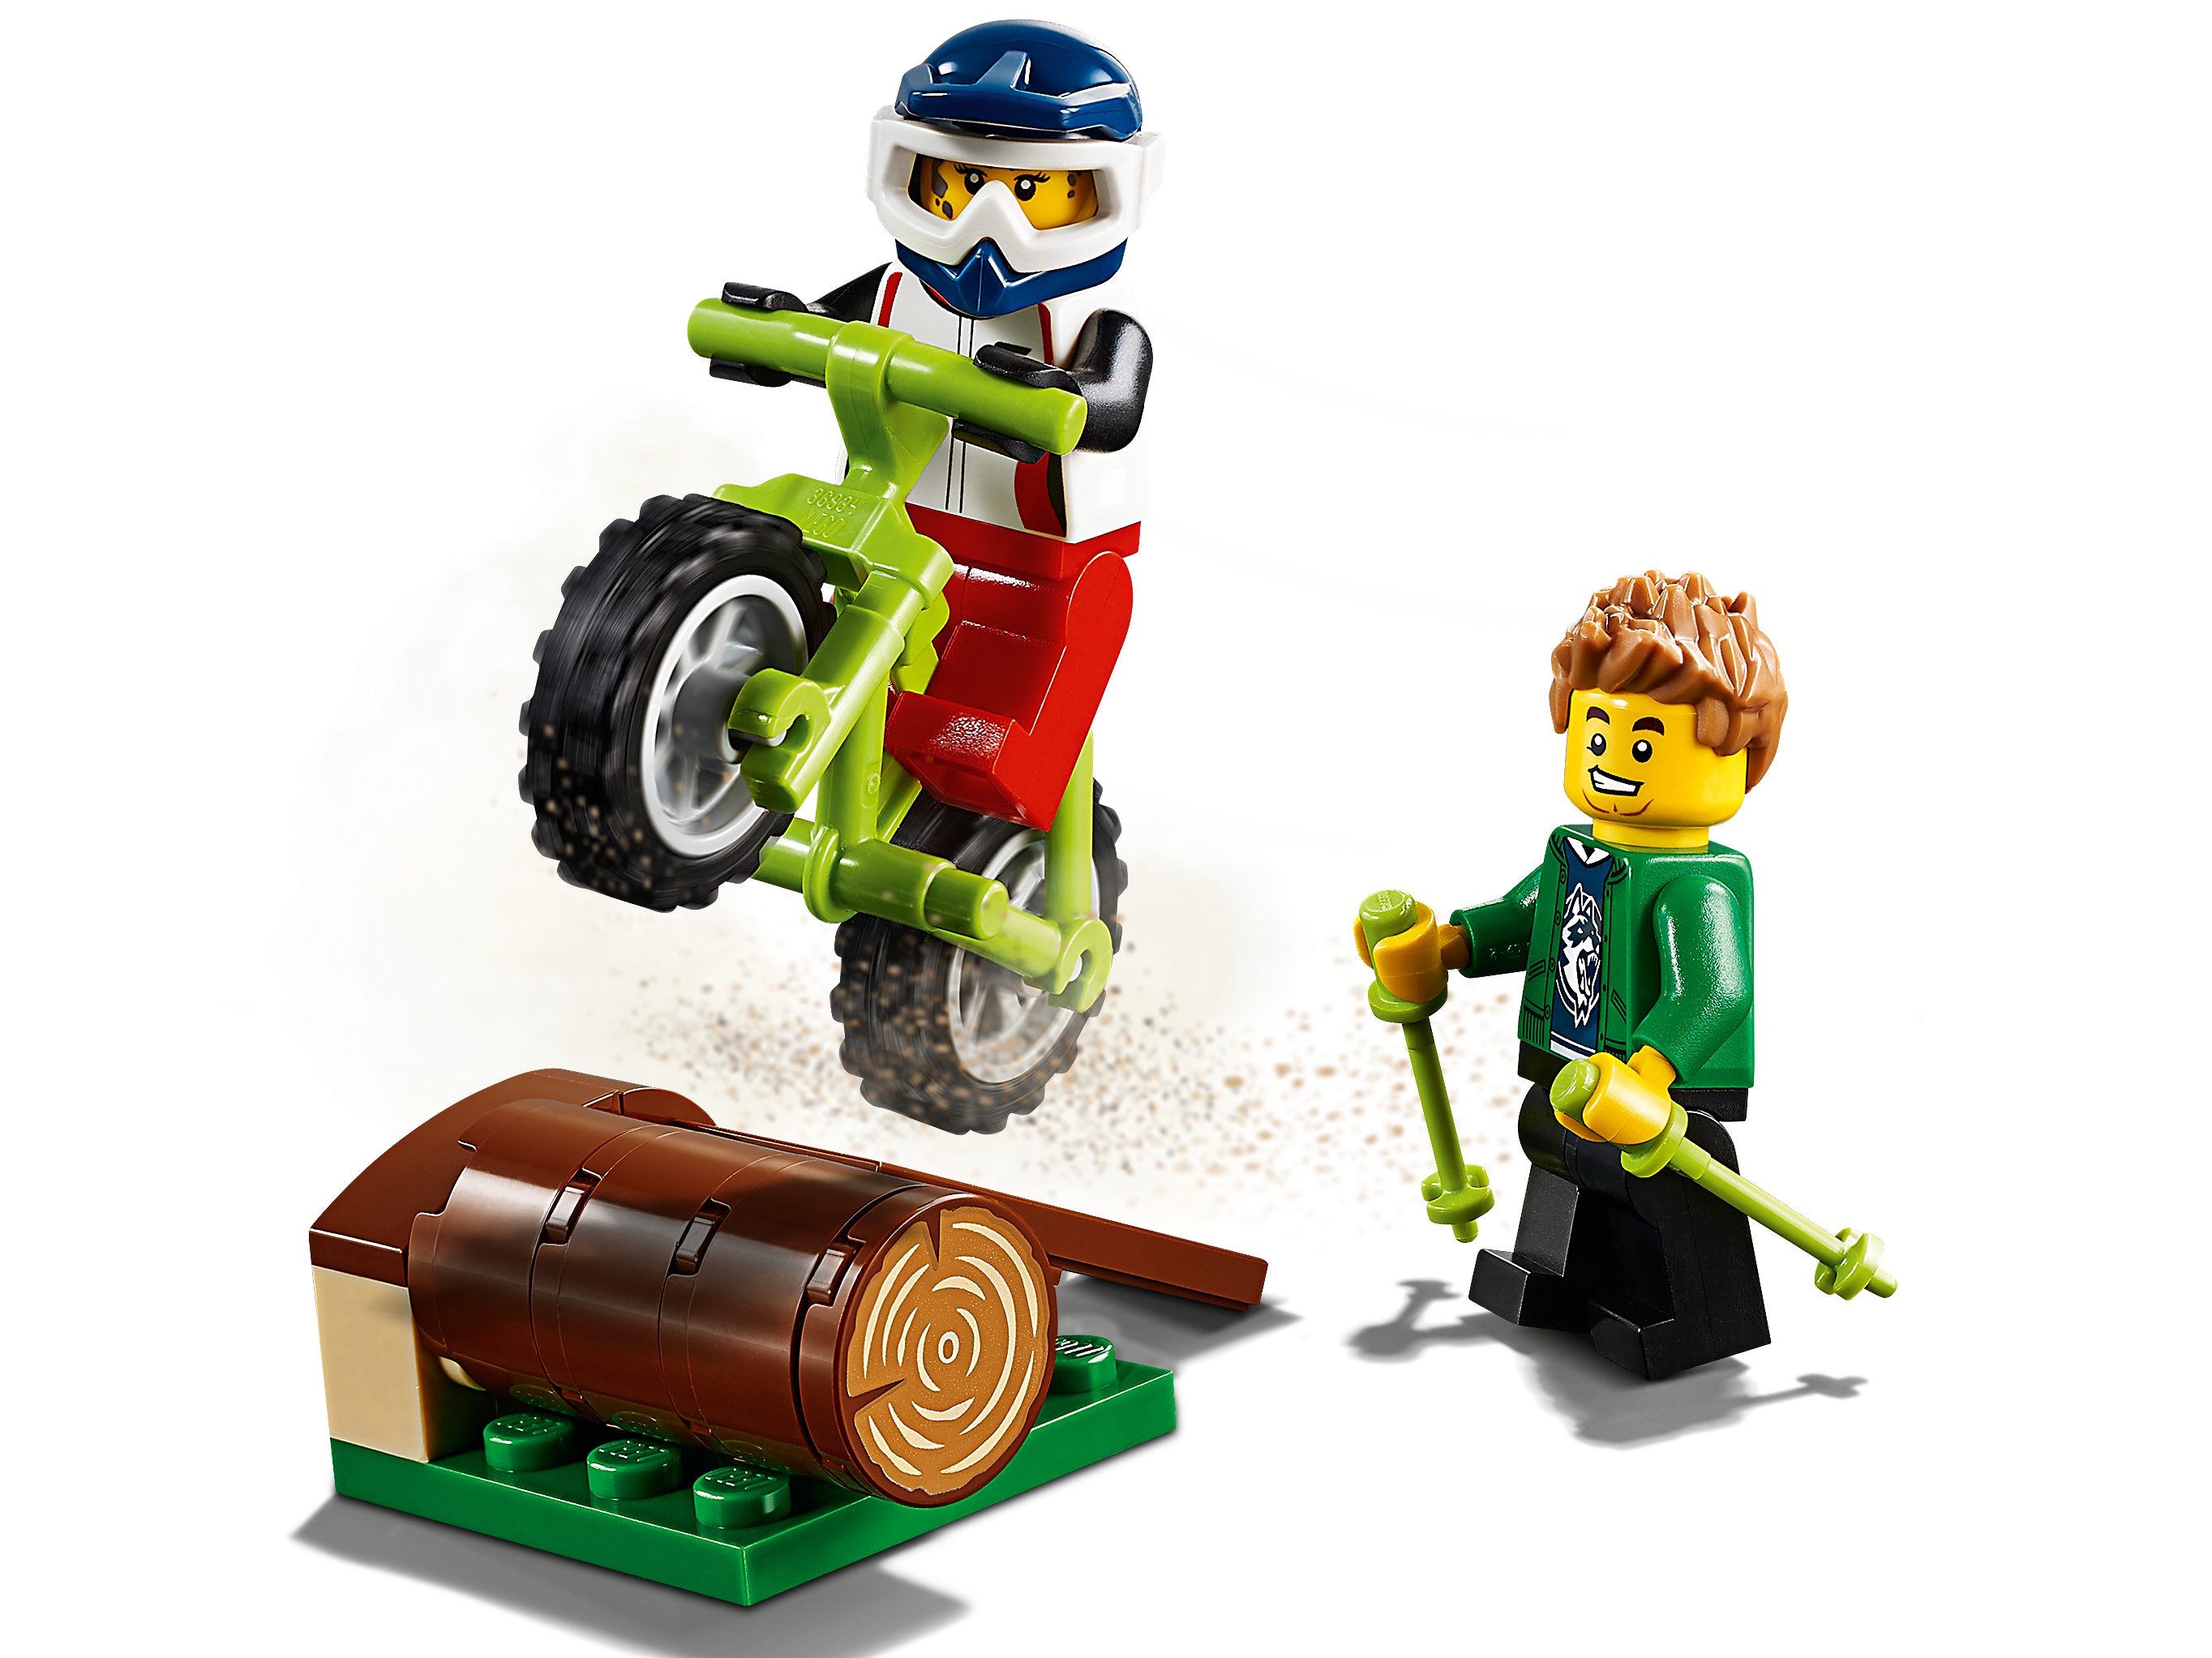 Lego City Figur grüne Jacke pck022 aus 2147 9287 mit grünen Cap Arbeiter 